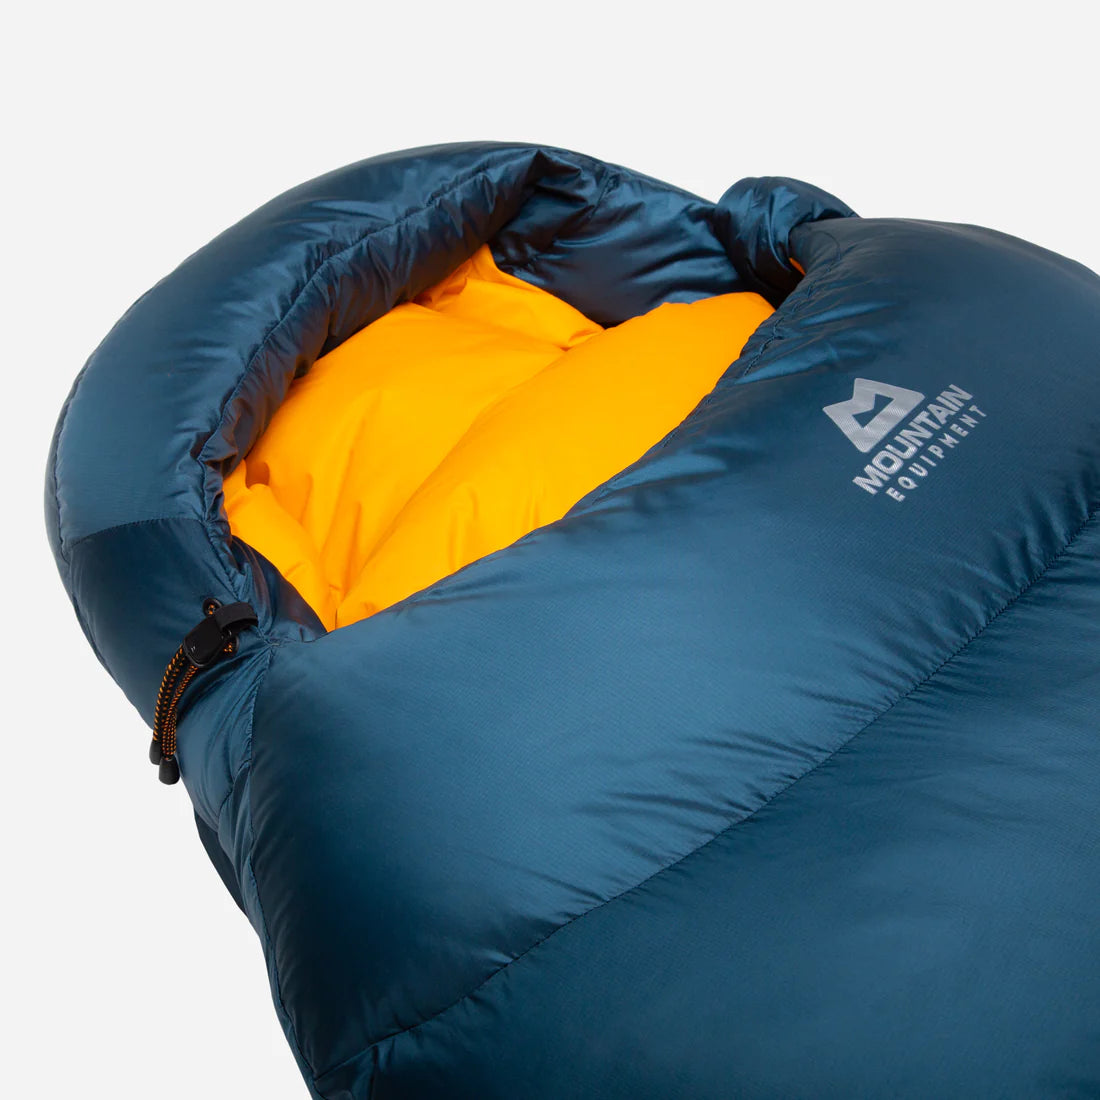 Mountain Equipment Helium 400 Down Sleeping Bag - Regular Length